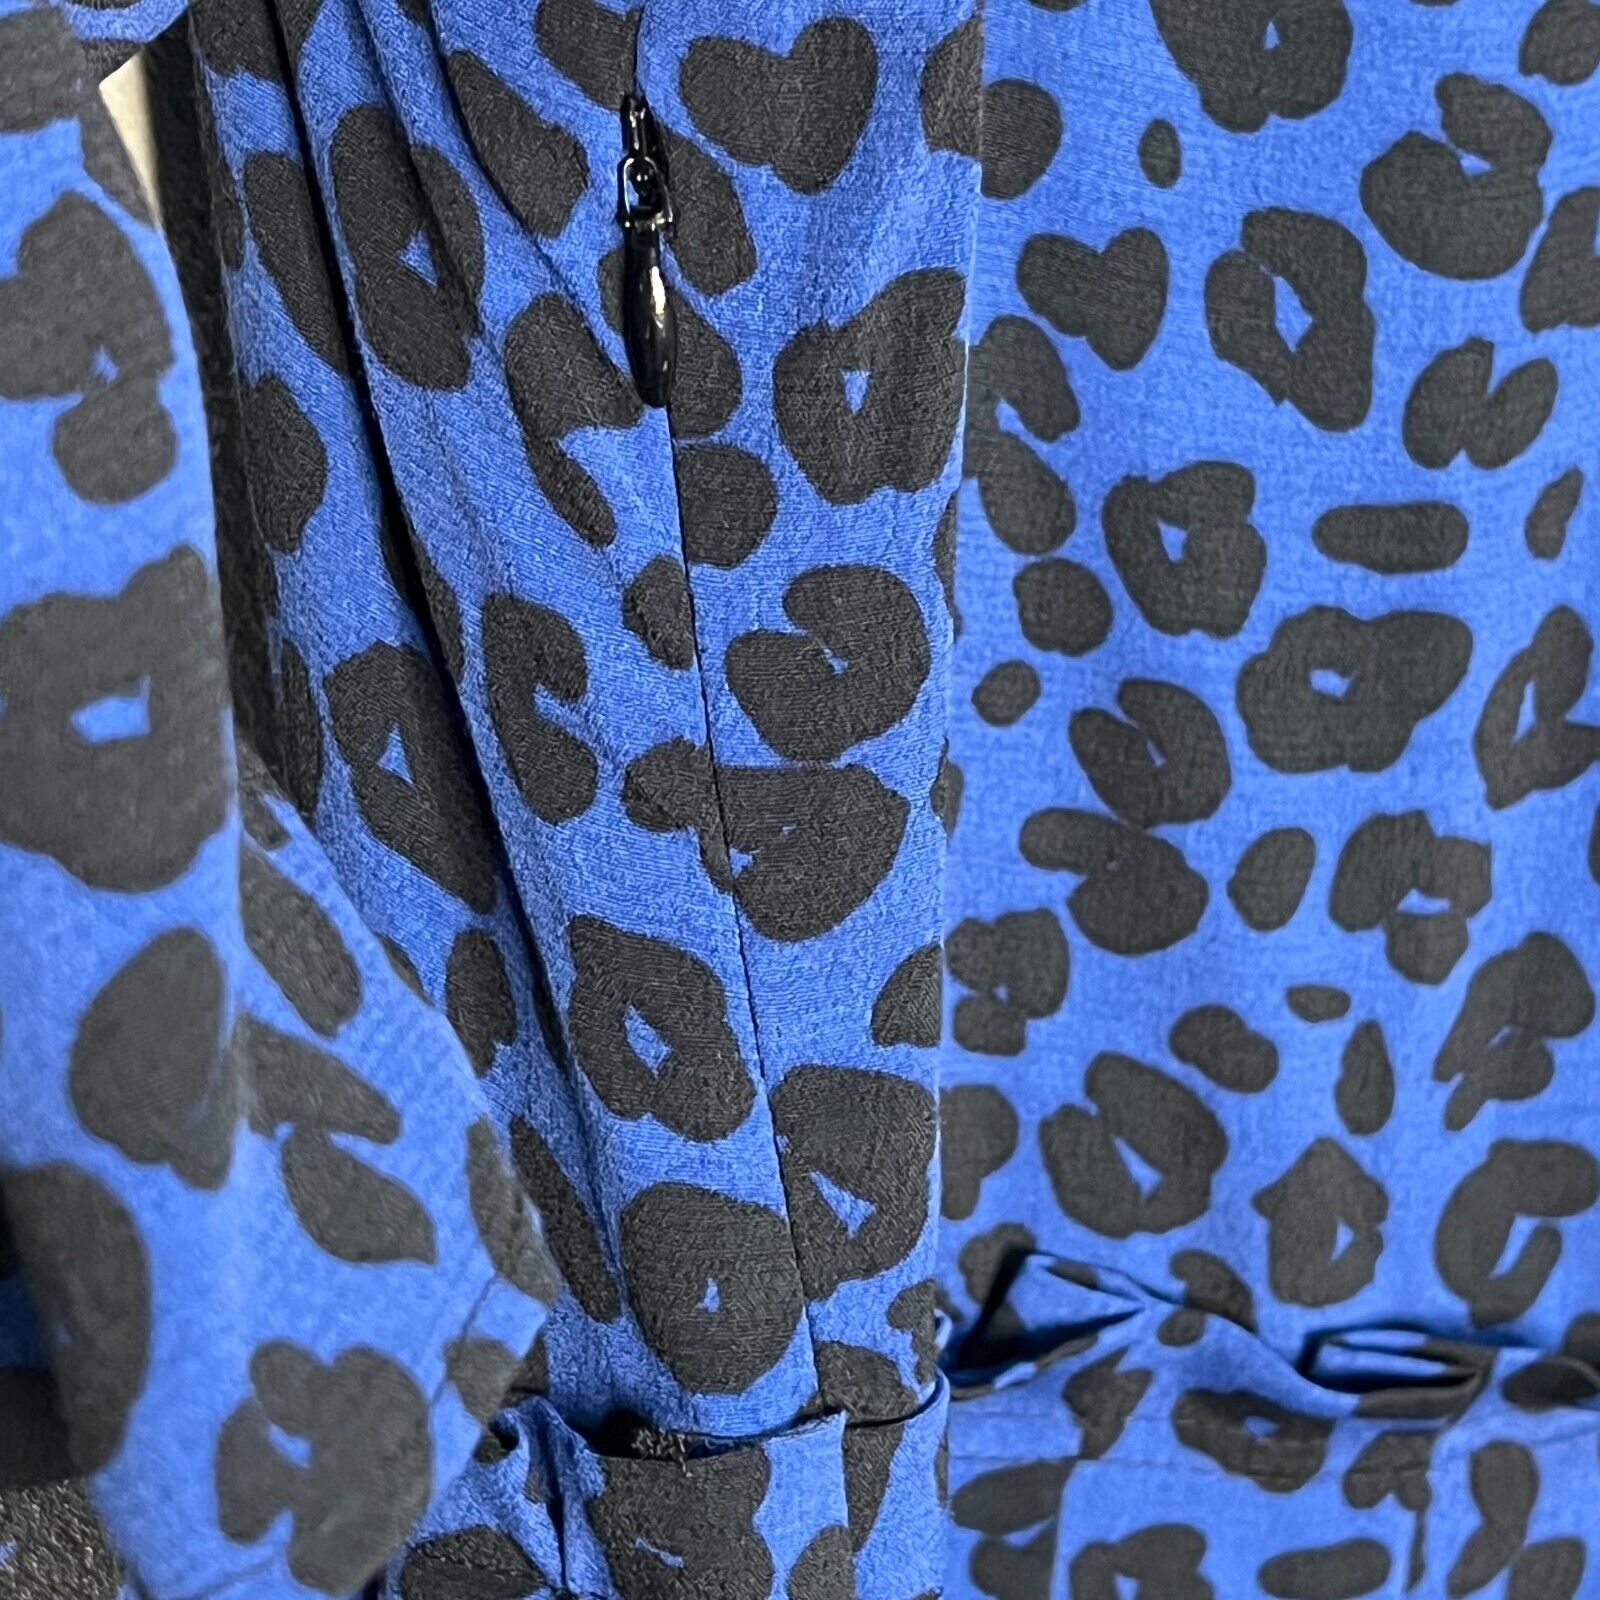 Claudie Pierlot Blue Black Leopard Print 3/4 Sleeve Dress 38 Approx US Size 6